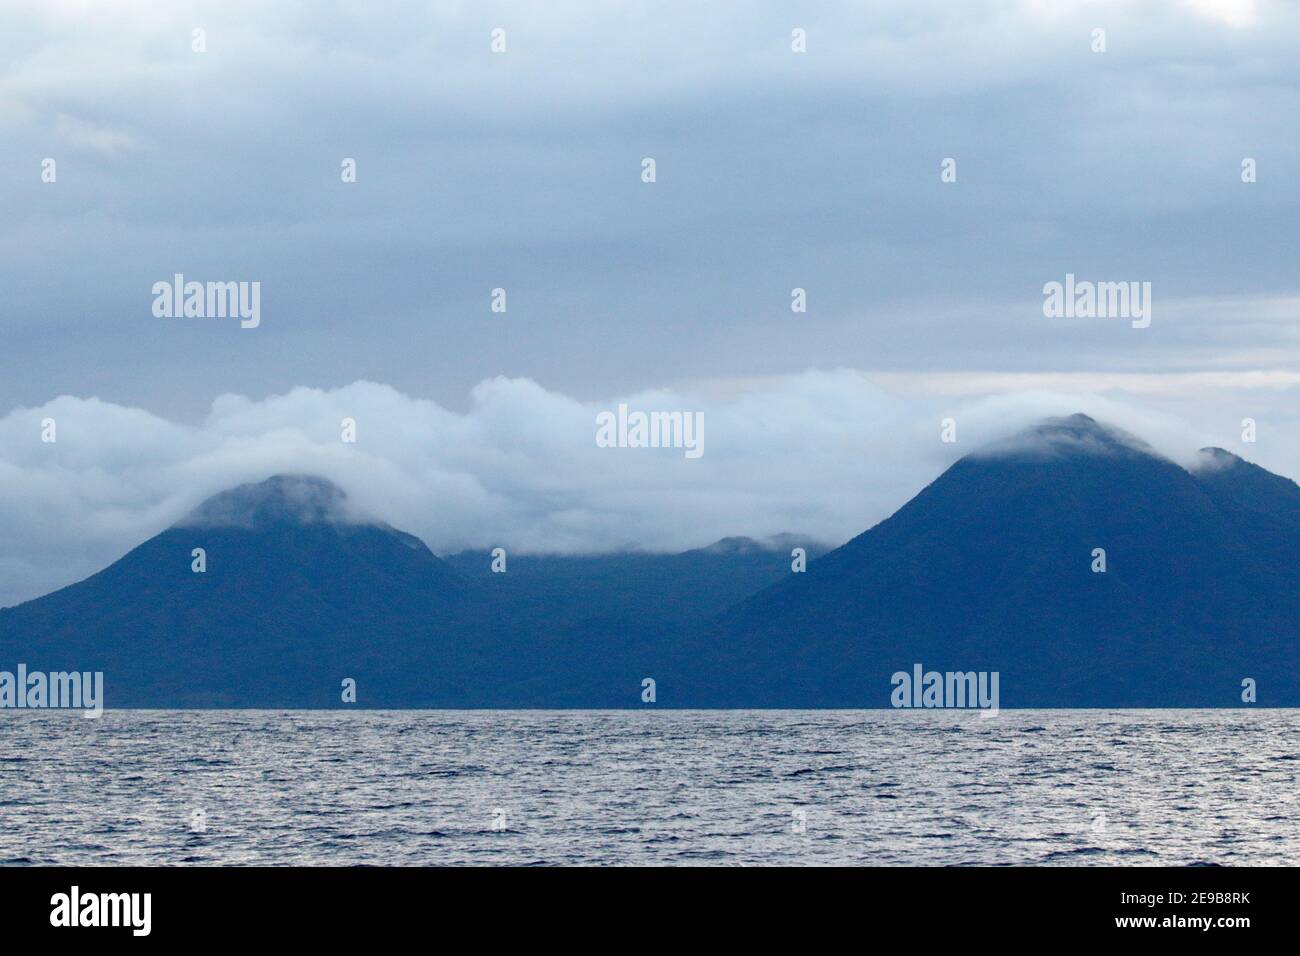 Banks Islands, vulkanische Kegel mit Wolken, Nord Vanuatu, Pazifischer Ozean 7th Jan 2017 Stockfoto